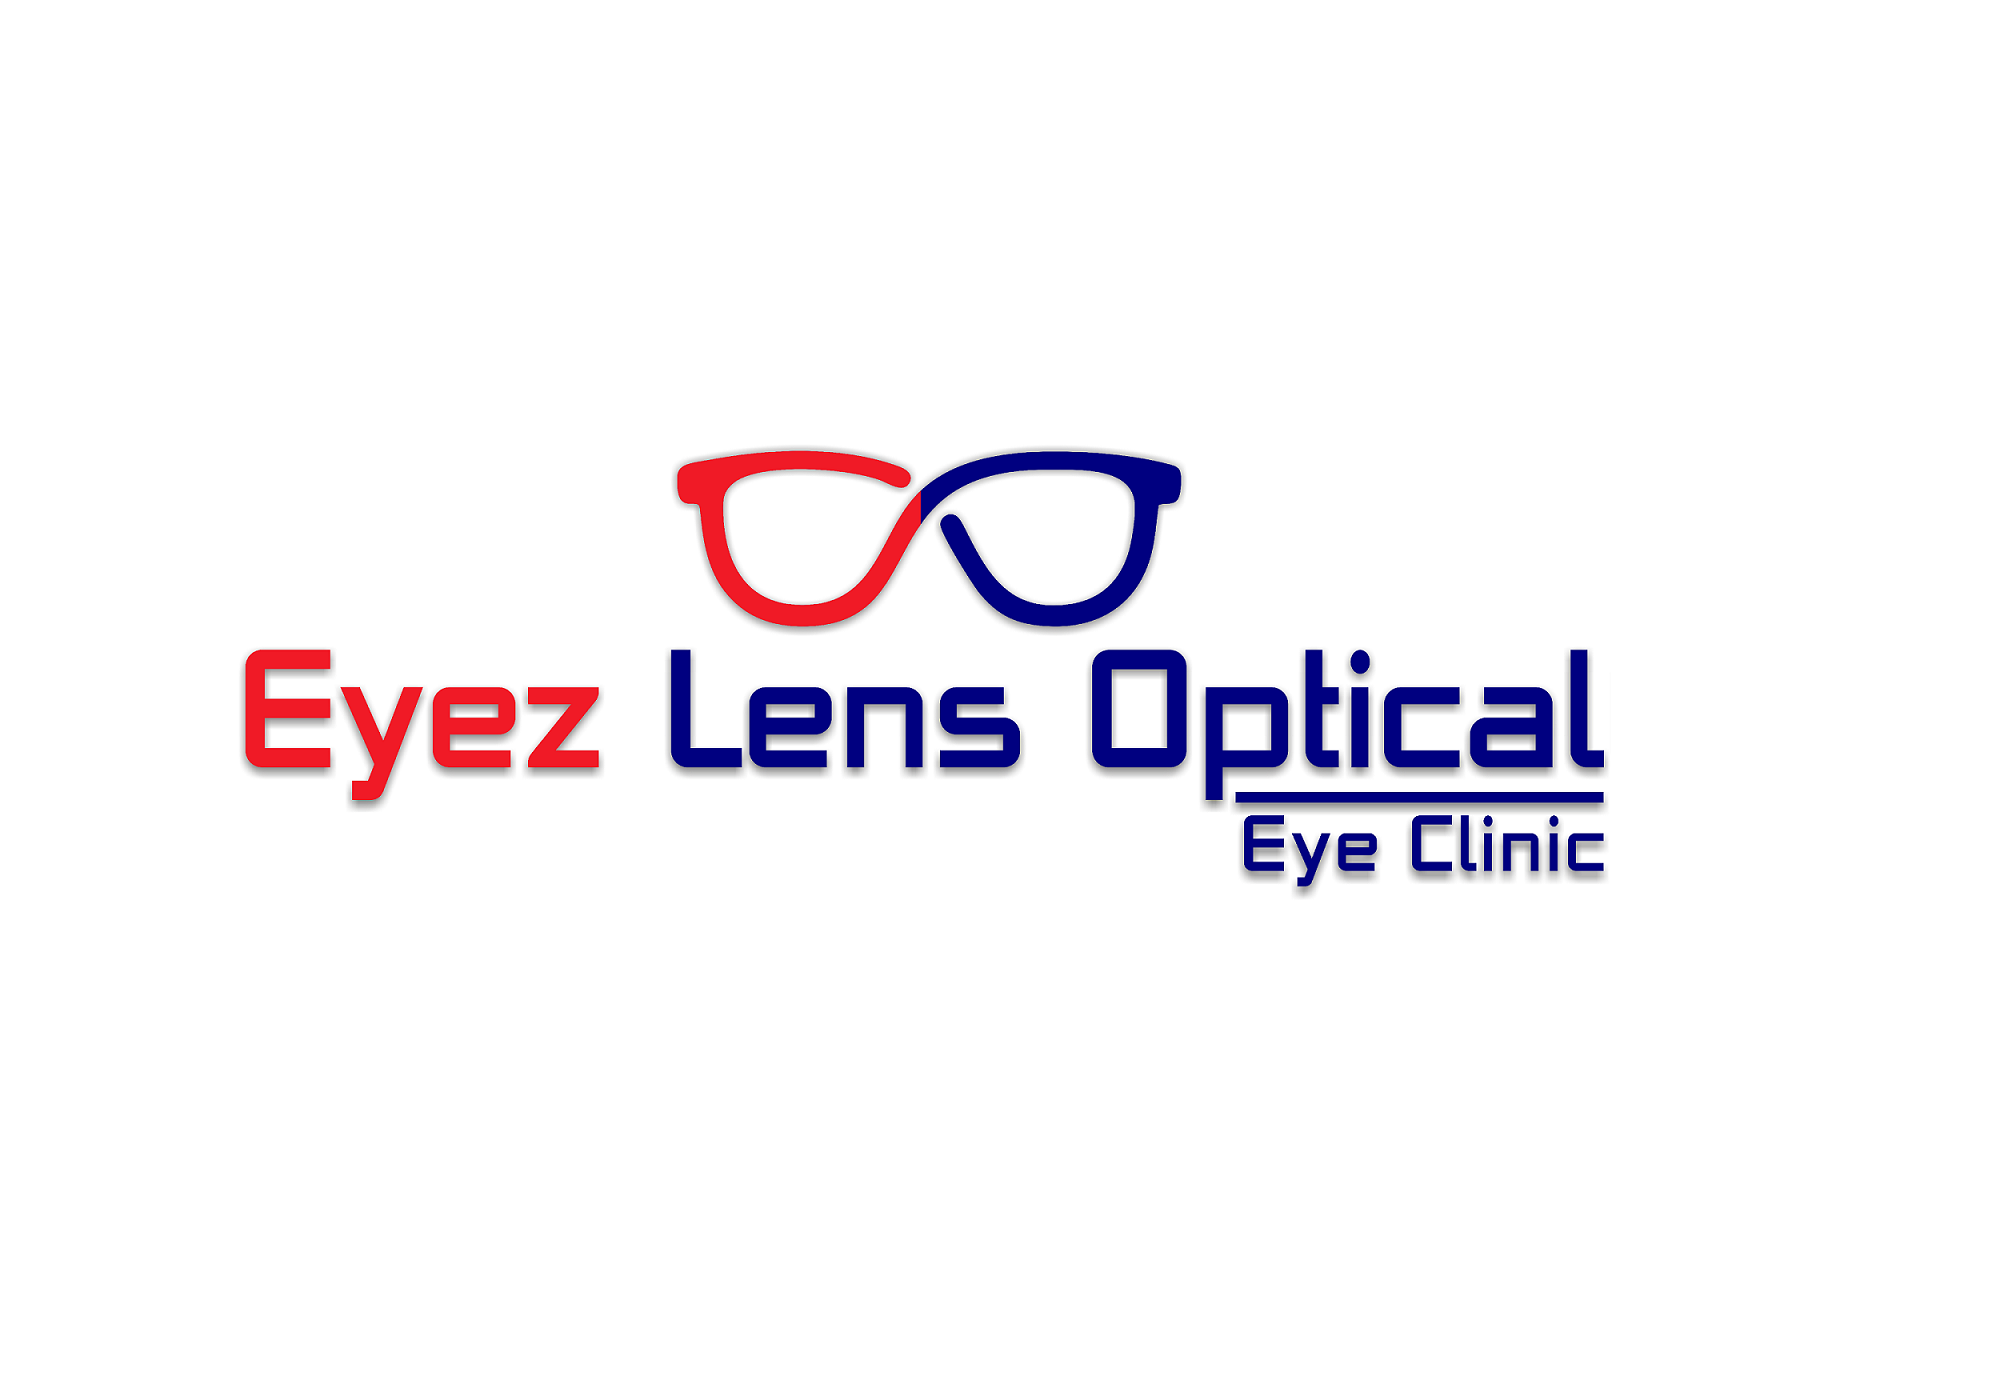 Eyez Lens Optical And Eye Clinic